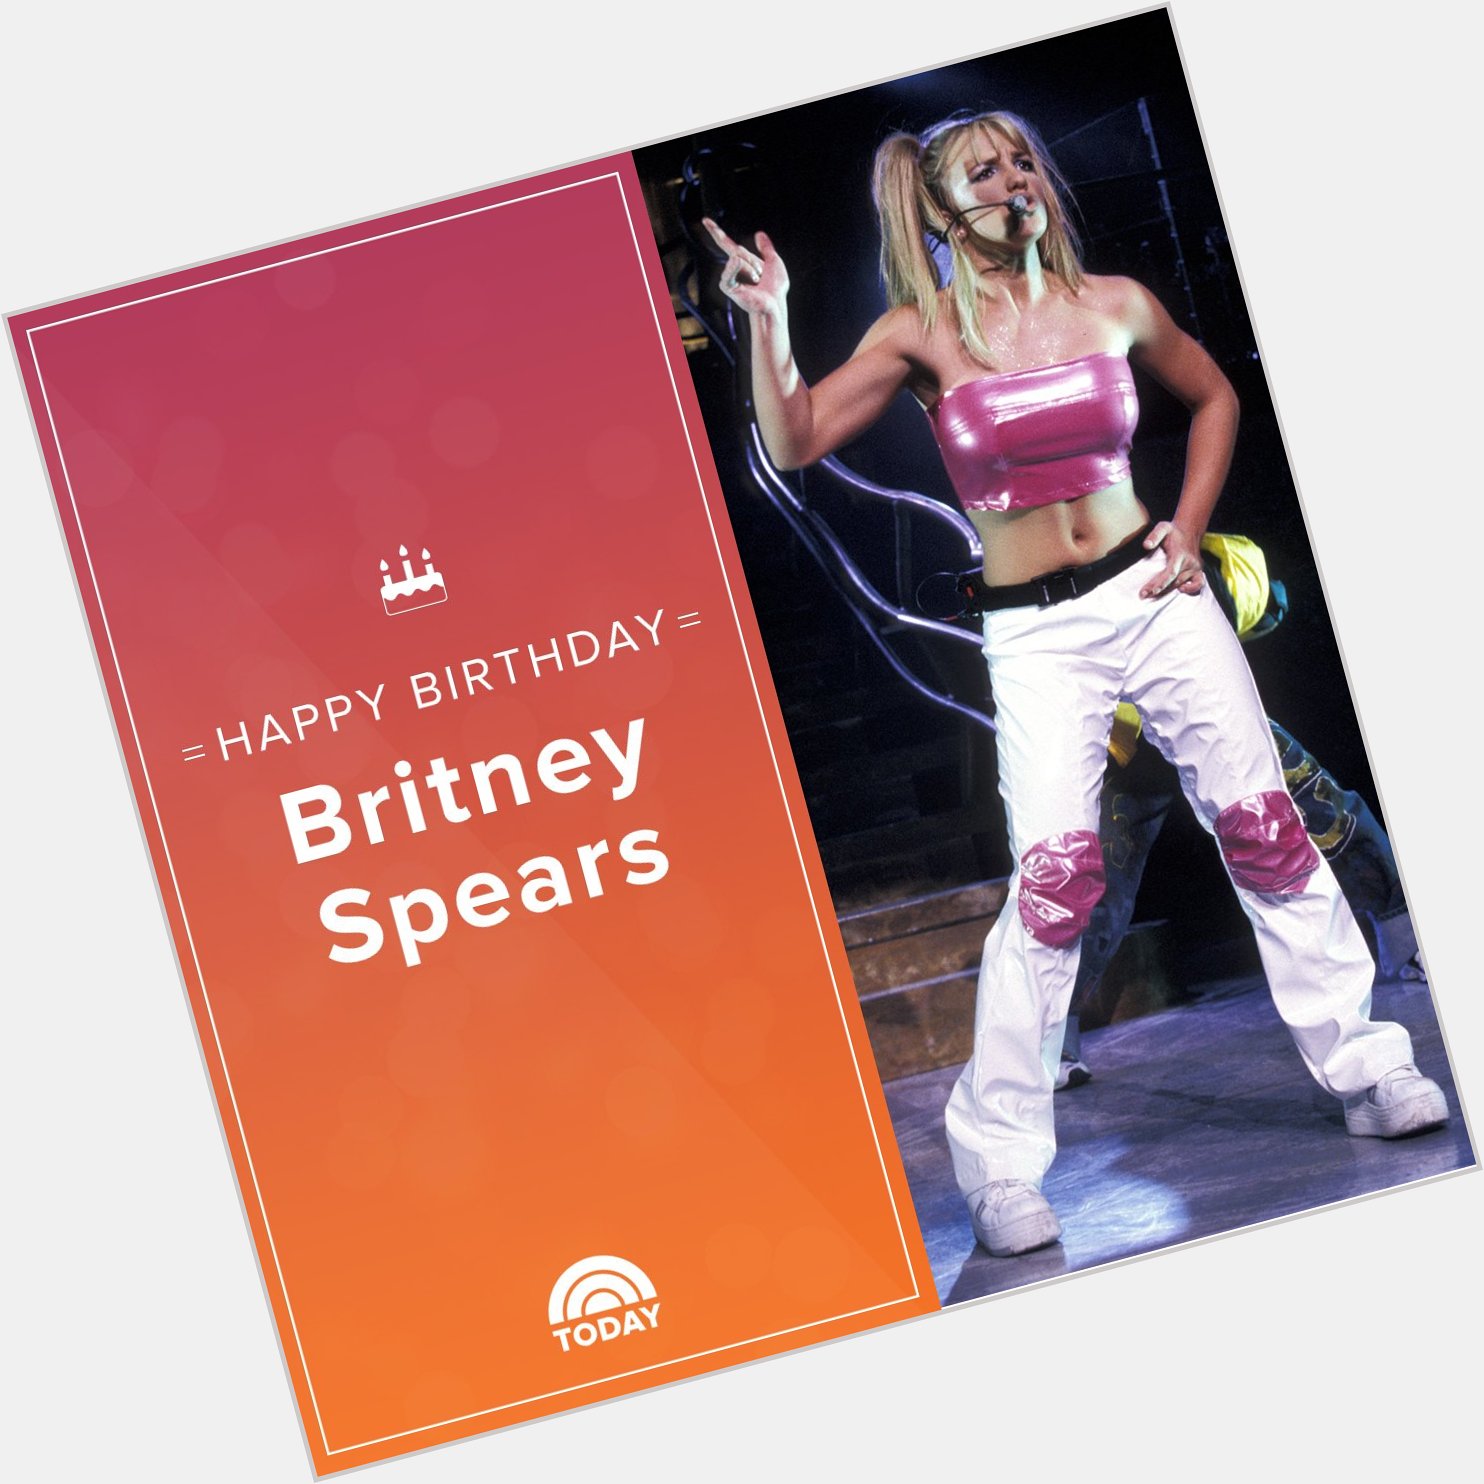 Happy birthday, Britney Spears!  